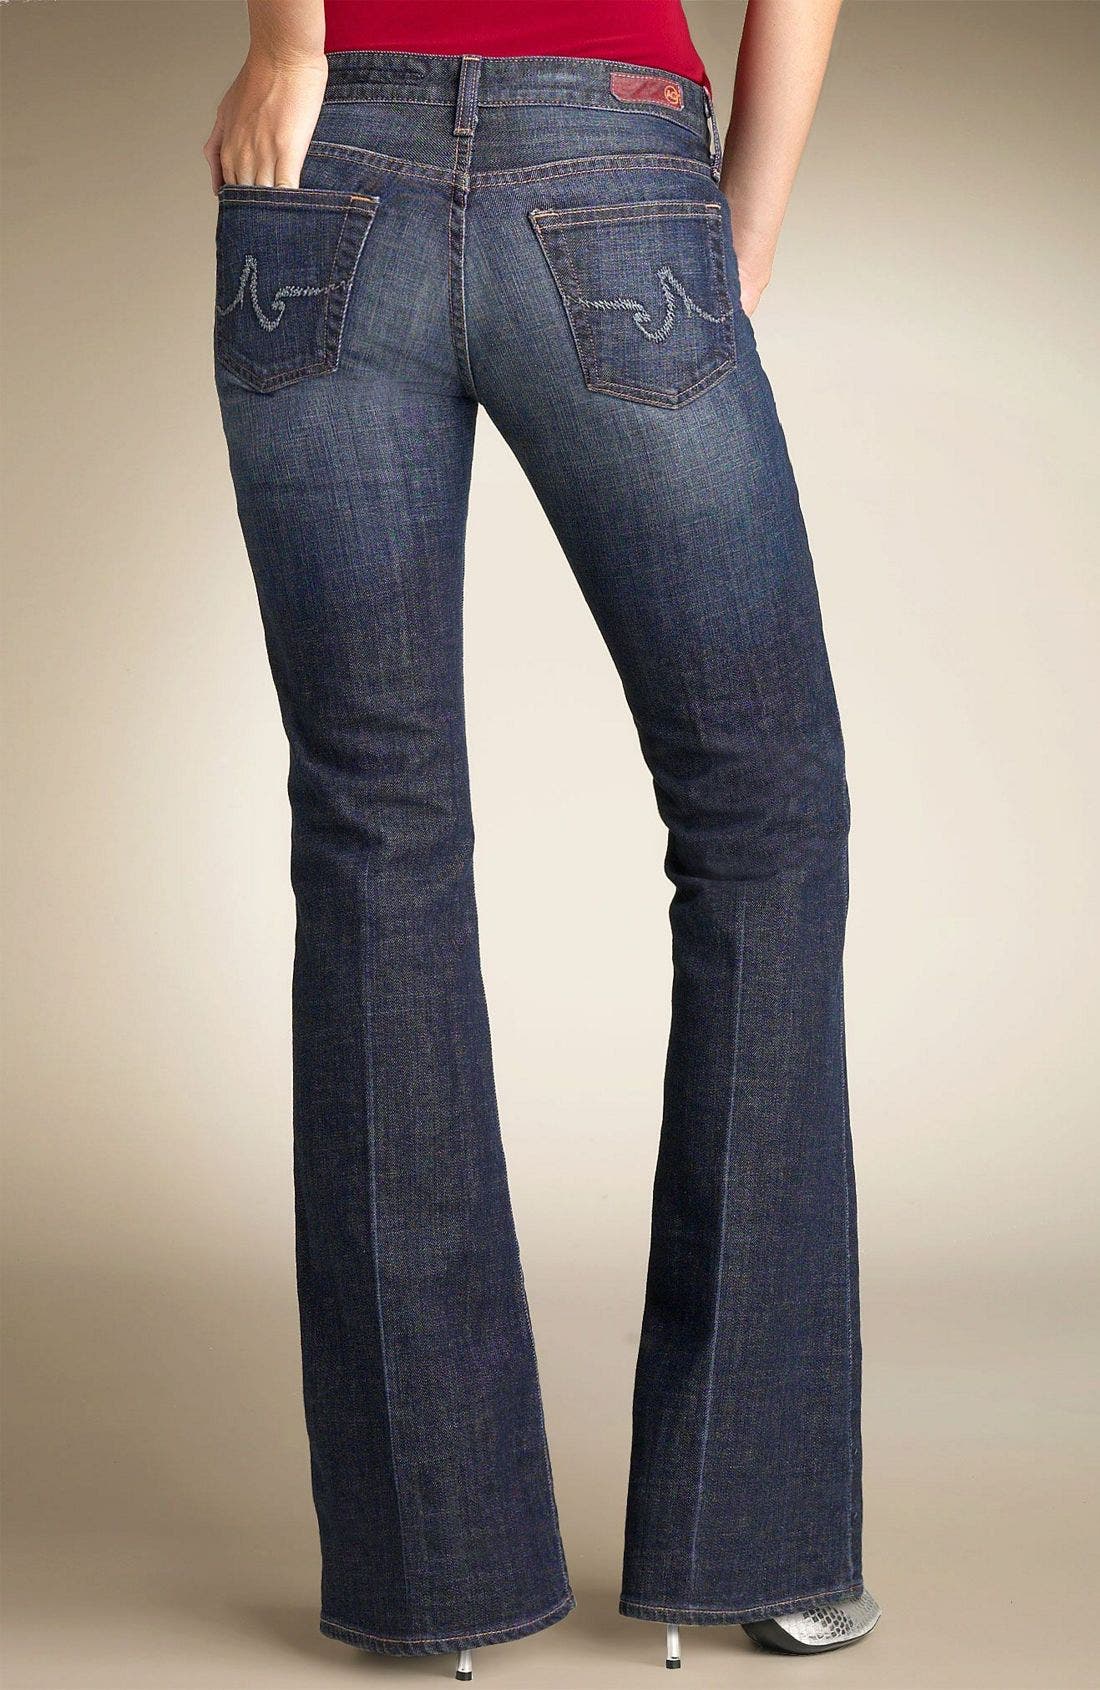 robin jeans ebay